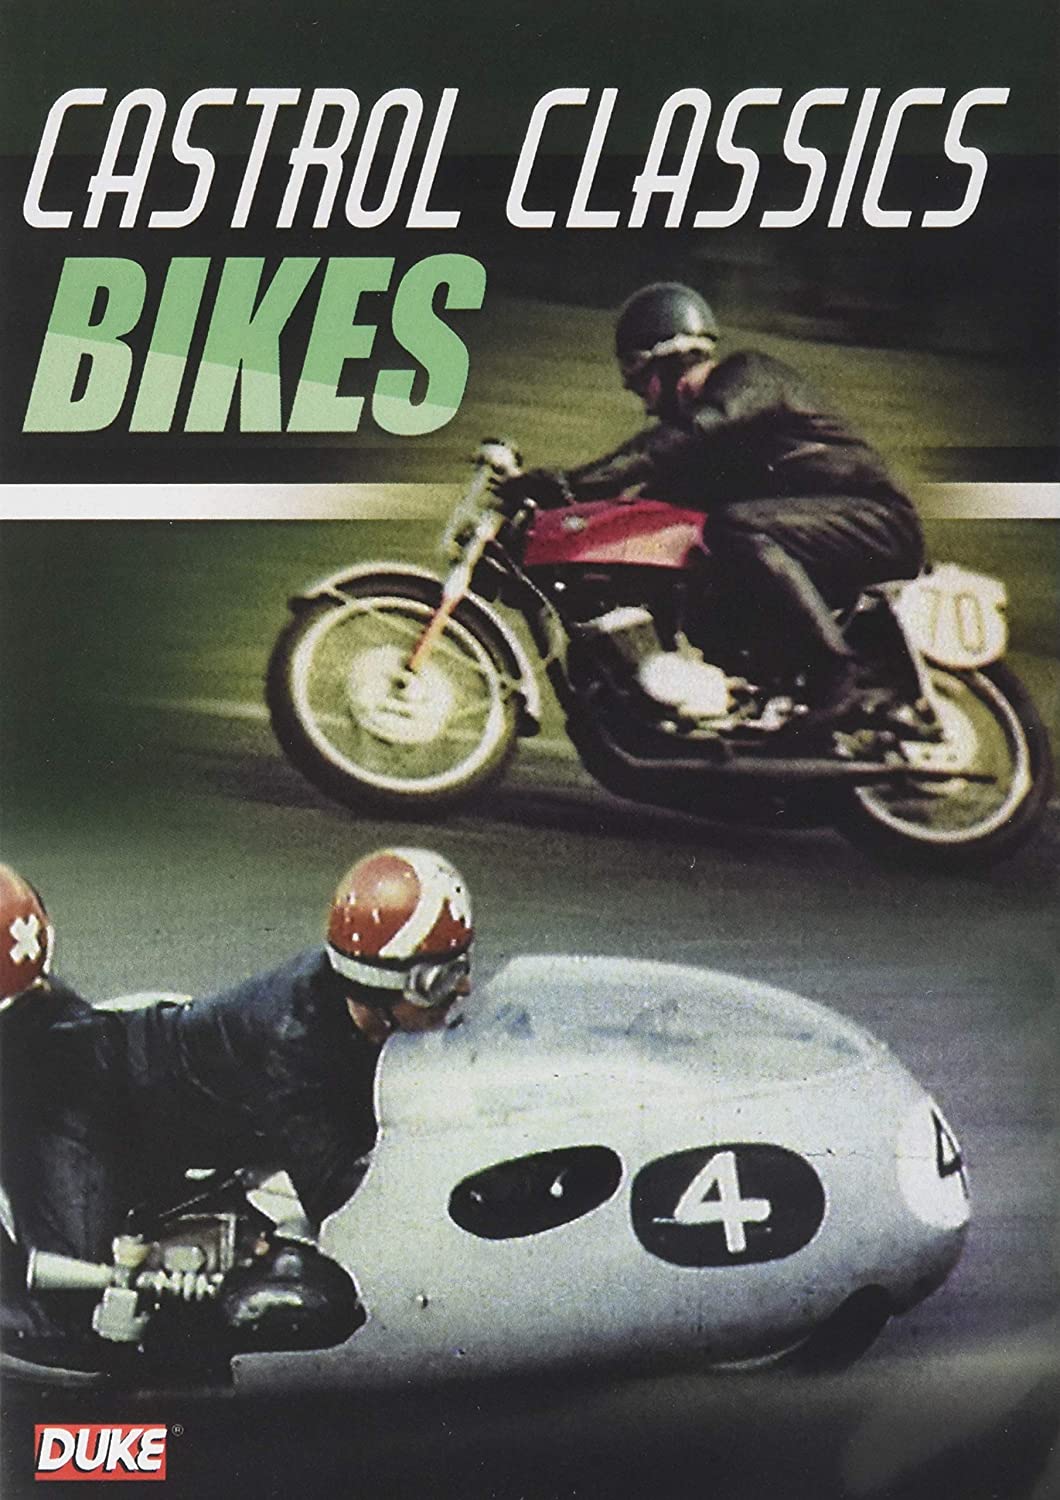 Castrol Classics Bikes [DVD]